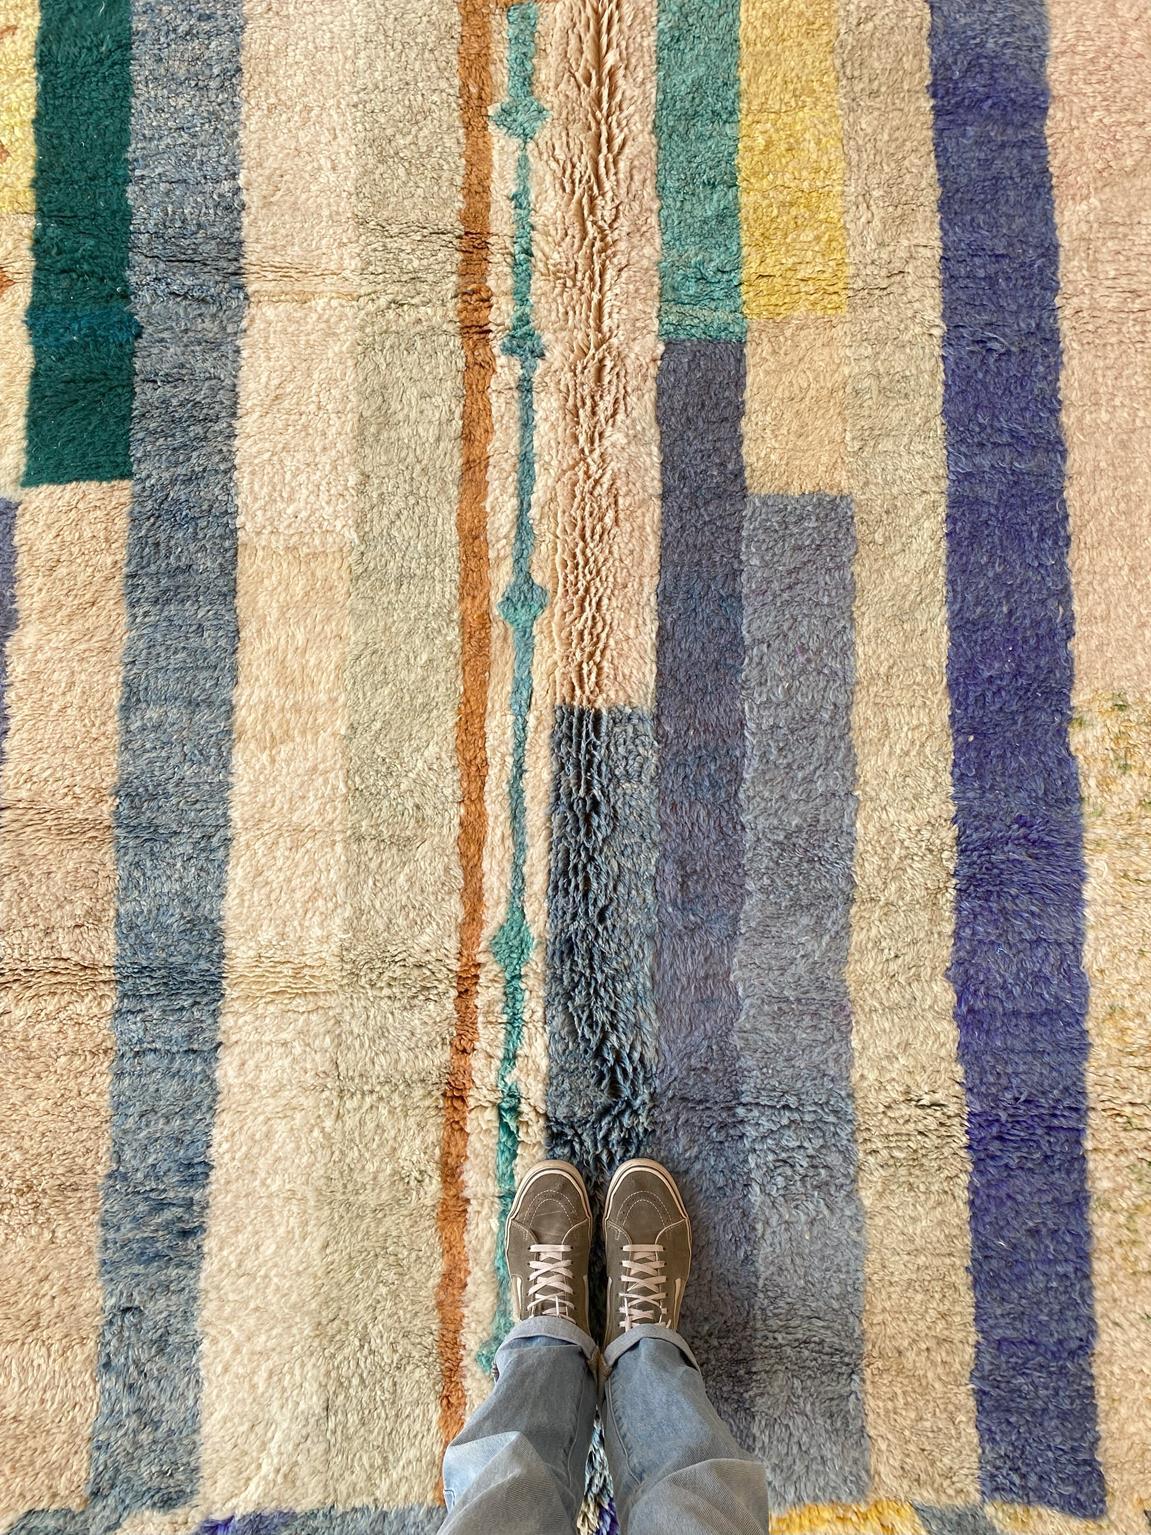 Modern Moroccan wool Mrirt rug - Blue/cream/yellow - 7x10.2feet / 214x310cm For Sale 4